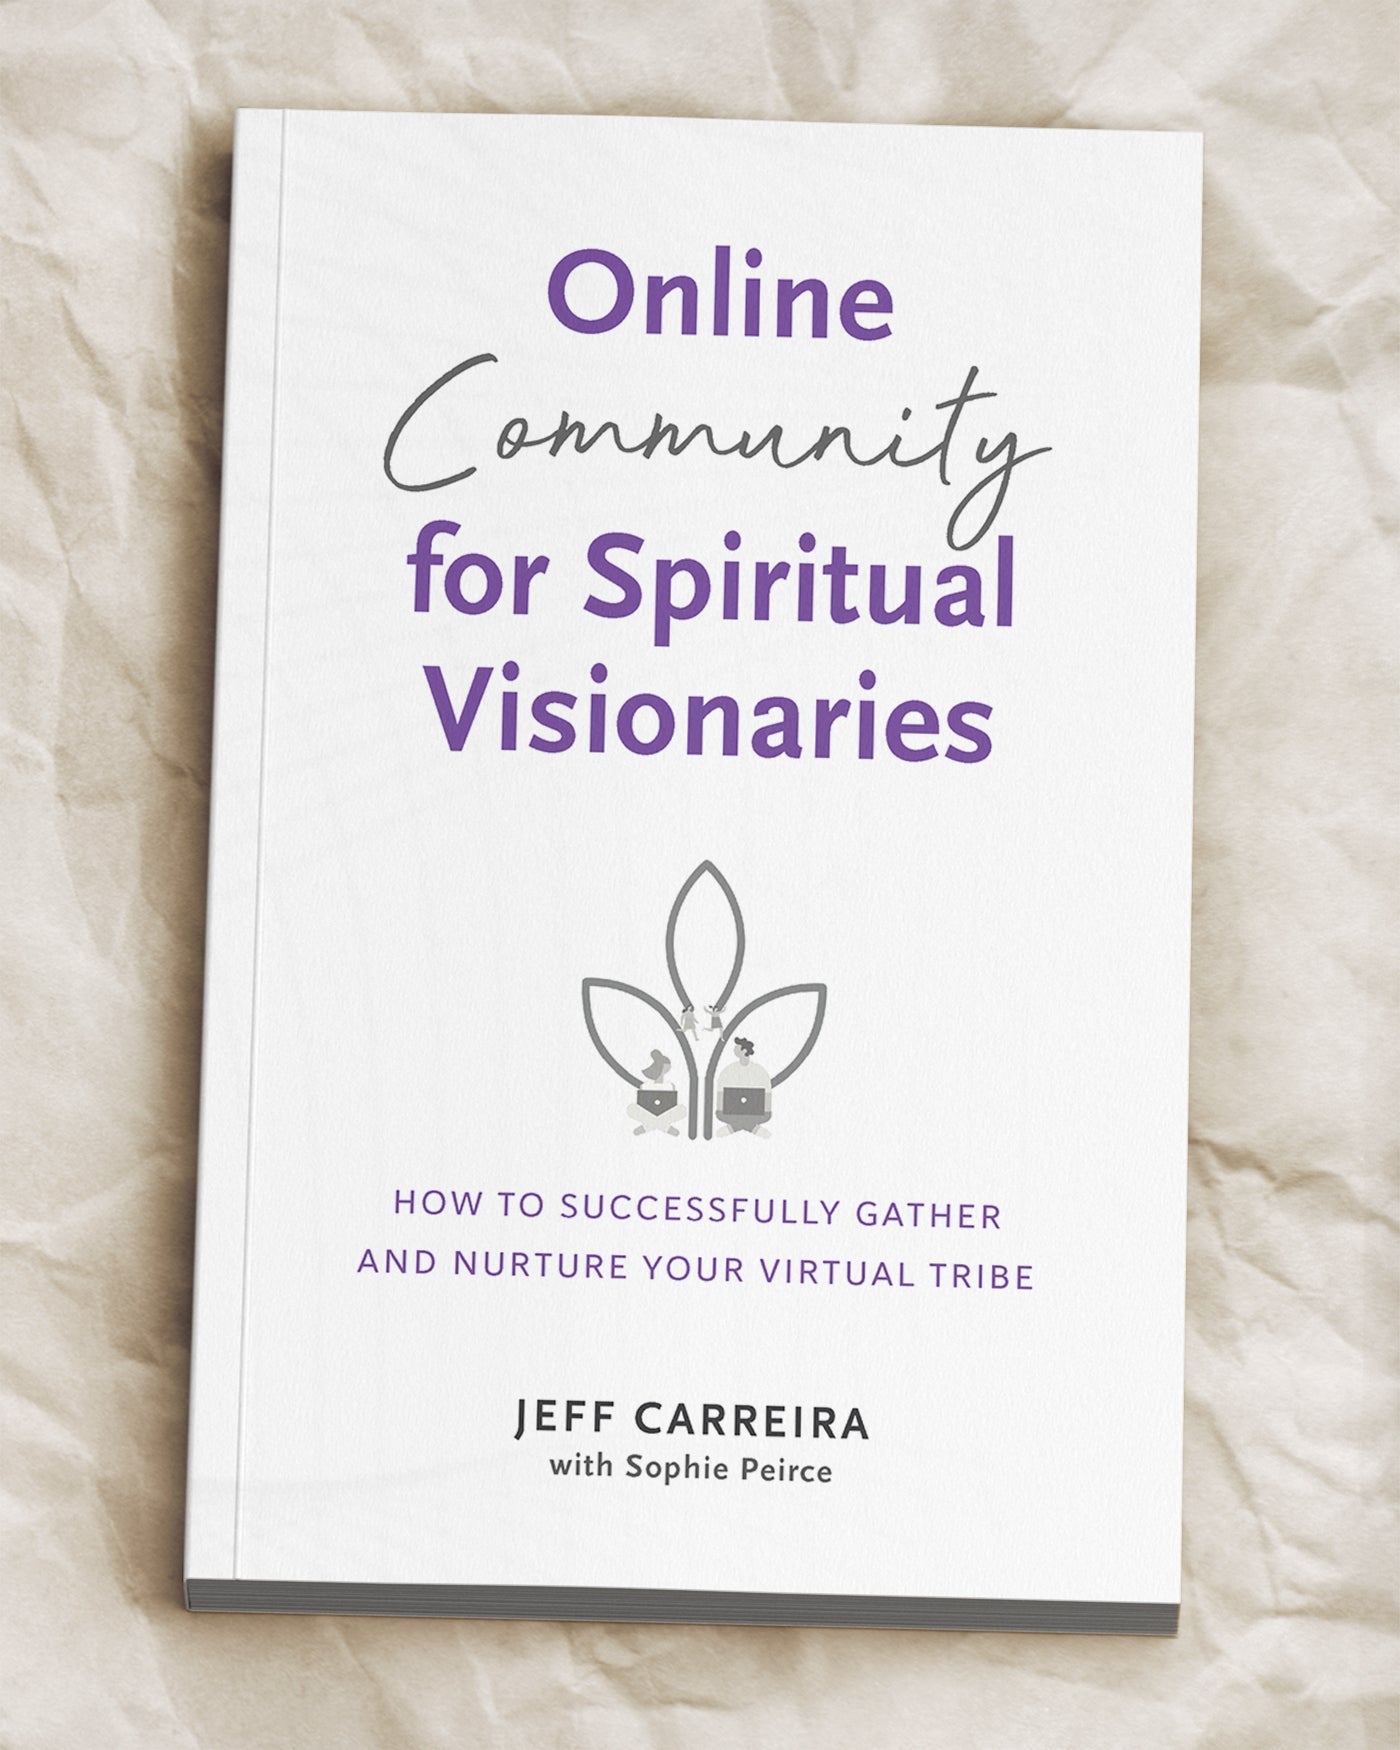 Online Business for Spiritual Visionaries Bundle [Paperback]